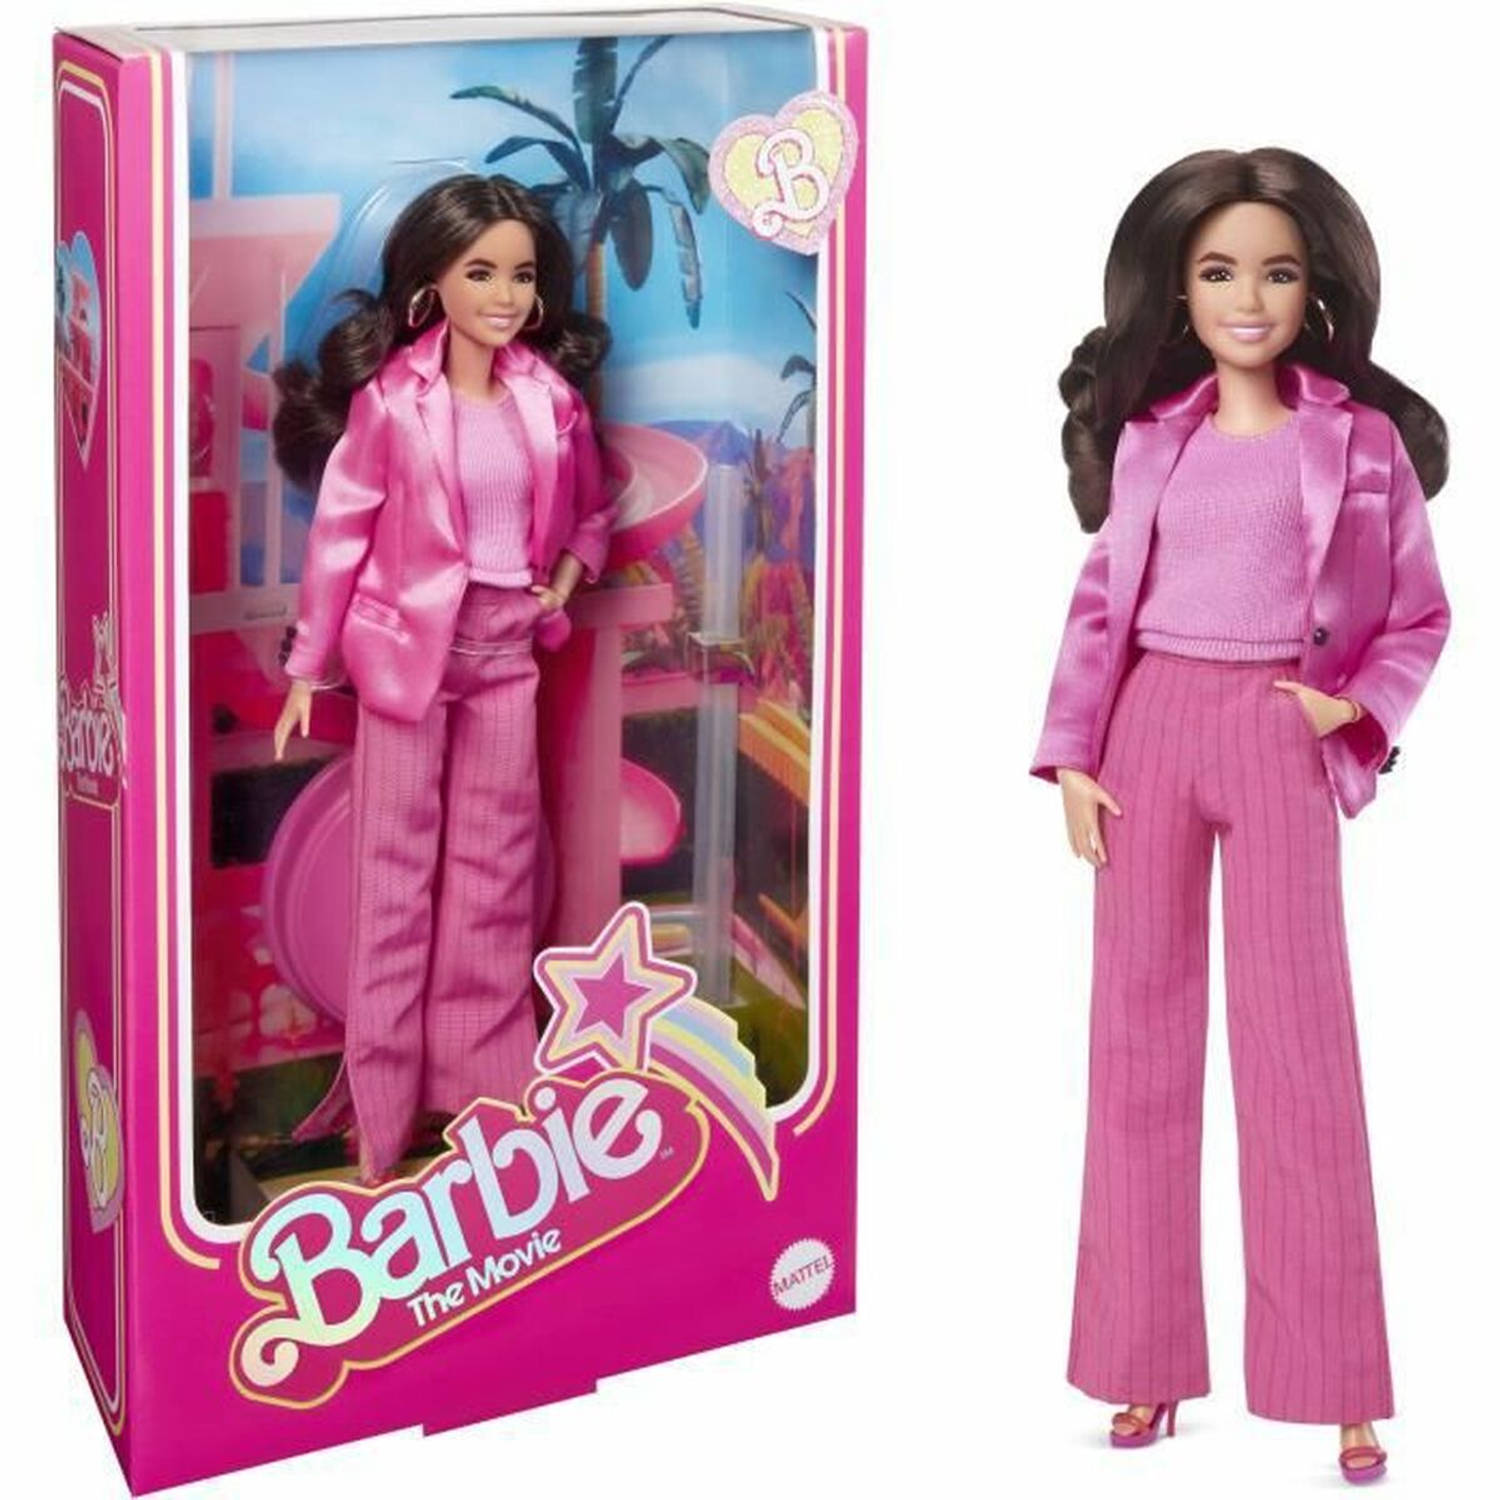 Barbie - The movie pop – Gloria - Barbie Gloria pop